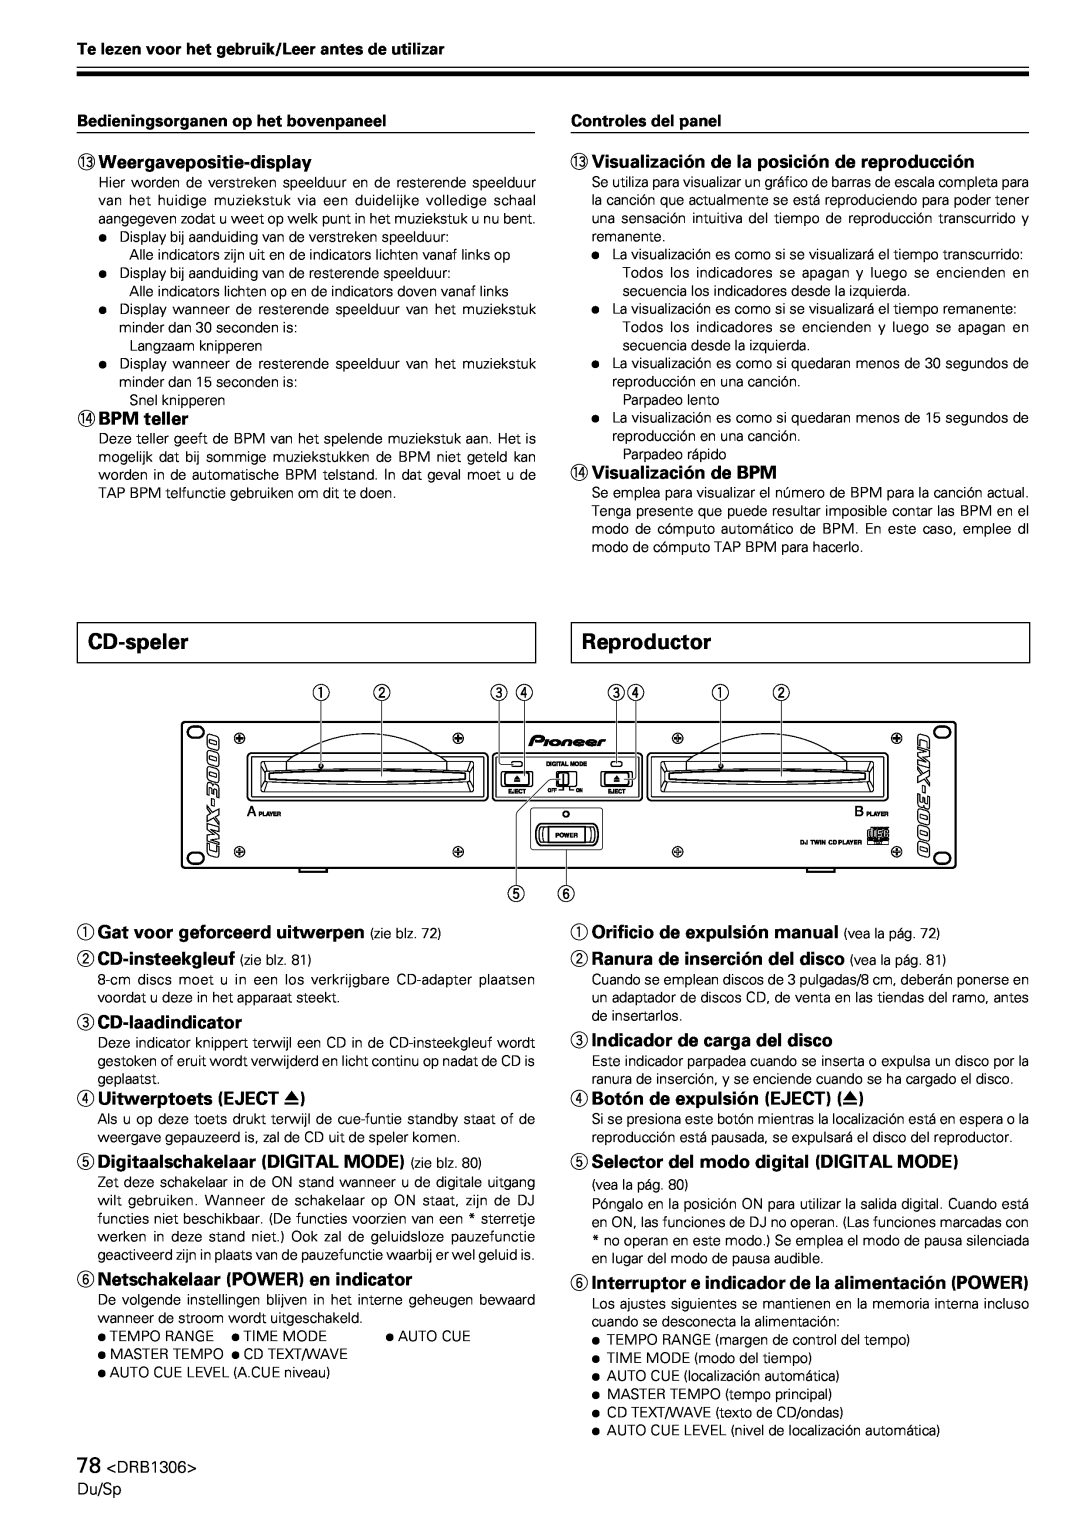 Pioneer CMX-3000 operating instructions CD-speler, Reproductor 